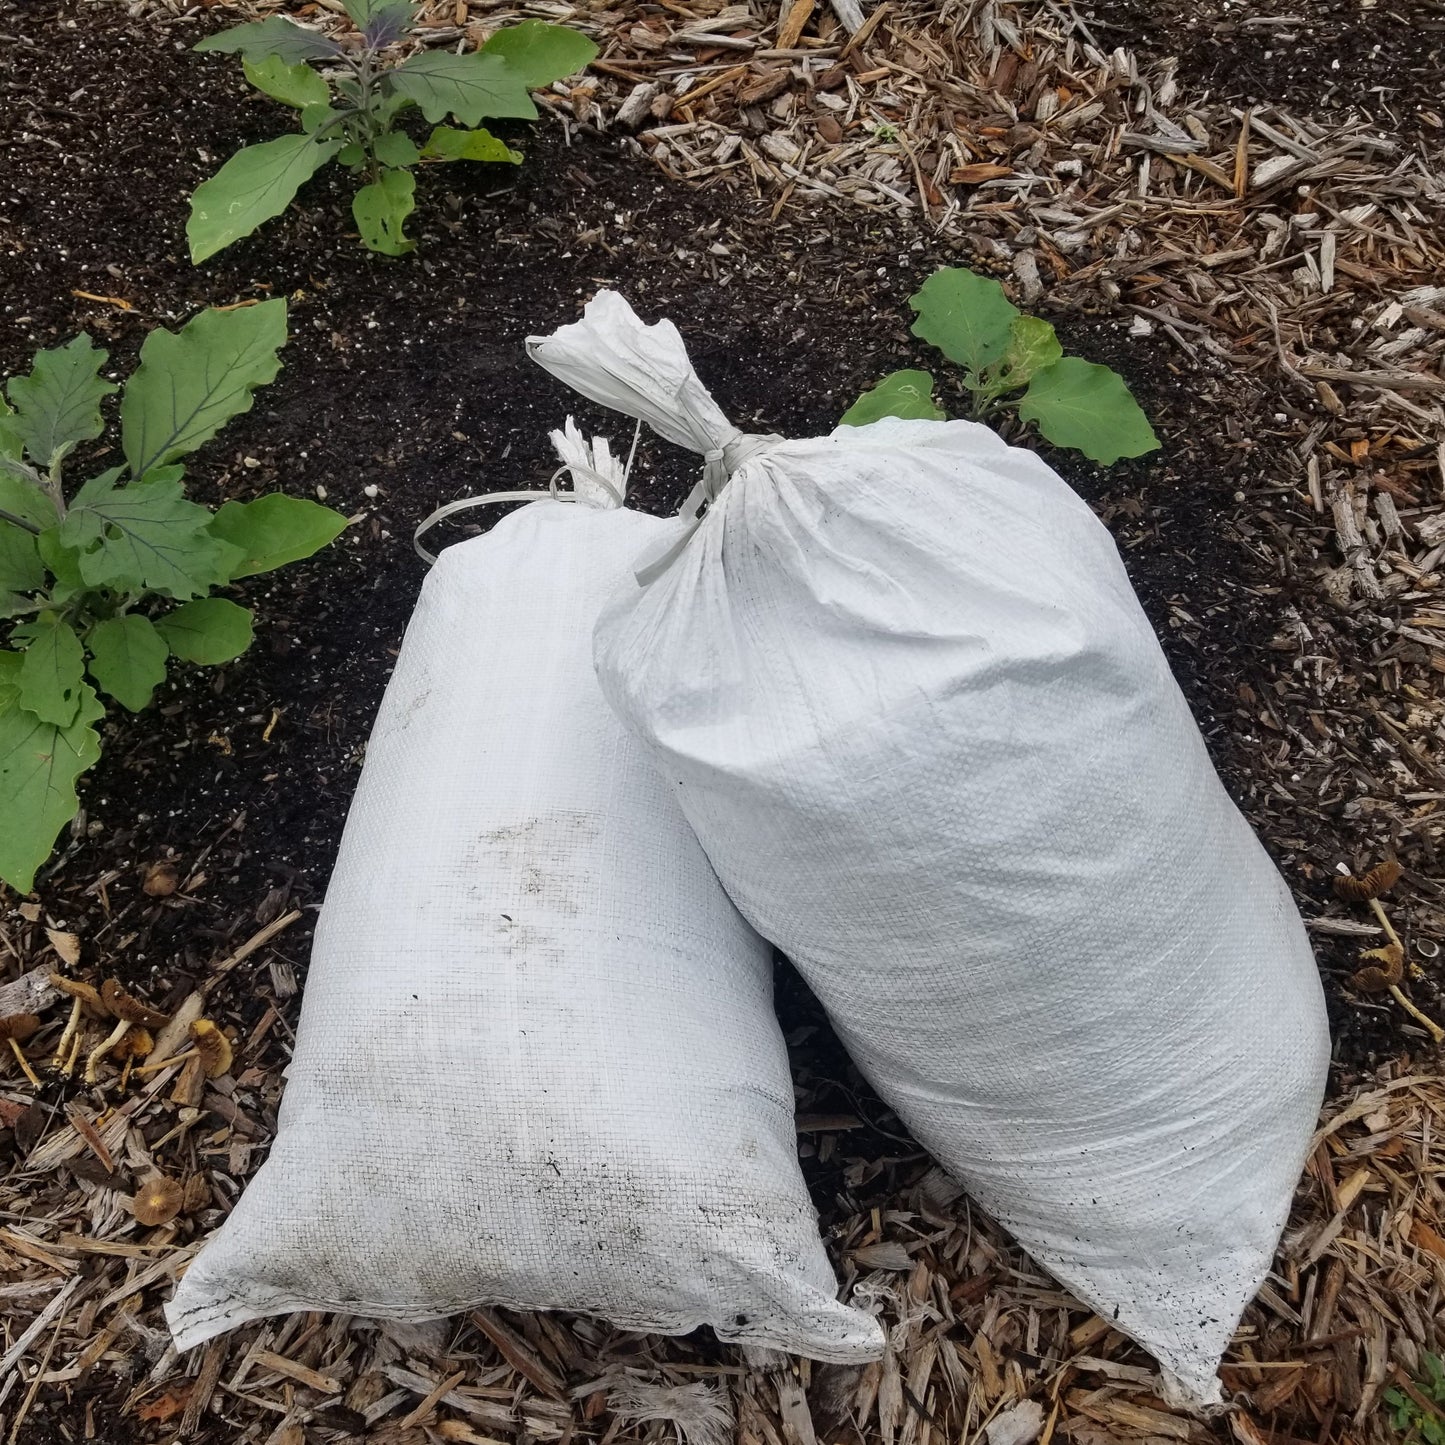 order garden compost bags, garden soil bags, bagged garden soil for pick up